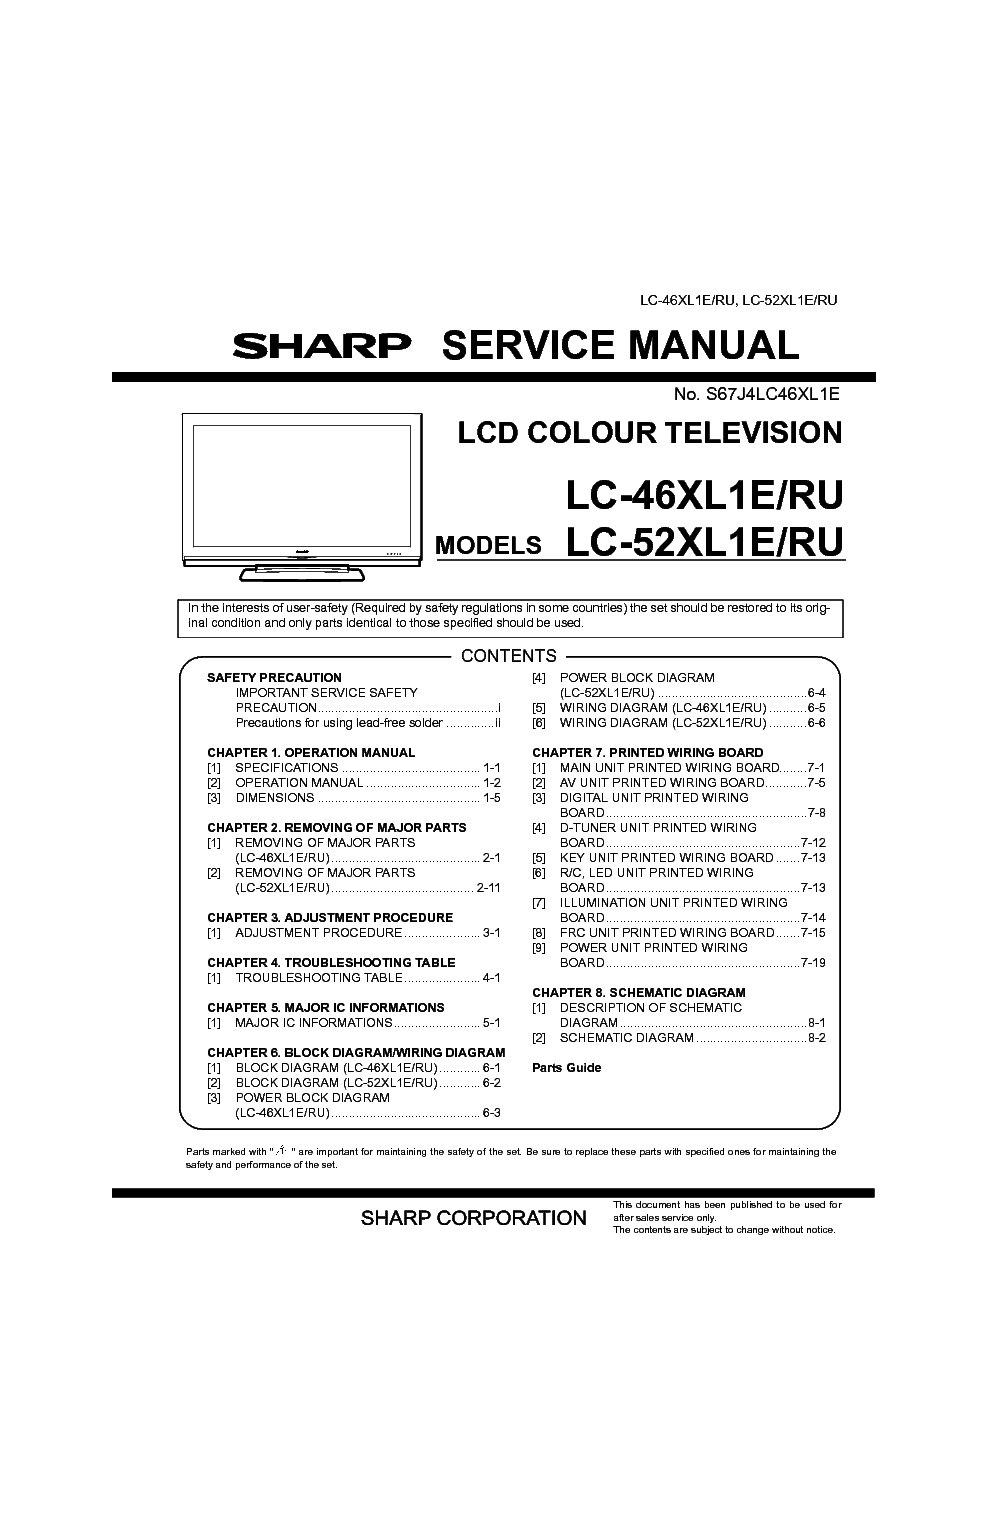 SHARP LC-46XL1E RU LC-46XL1E RU service manual (1st page)